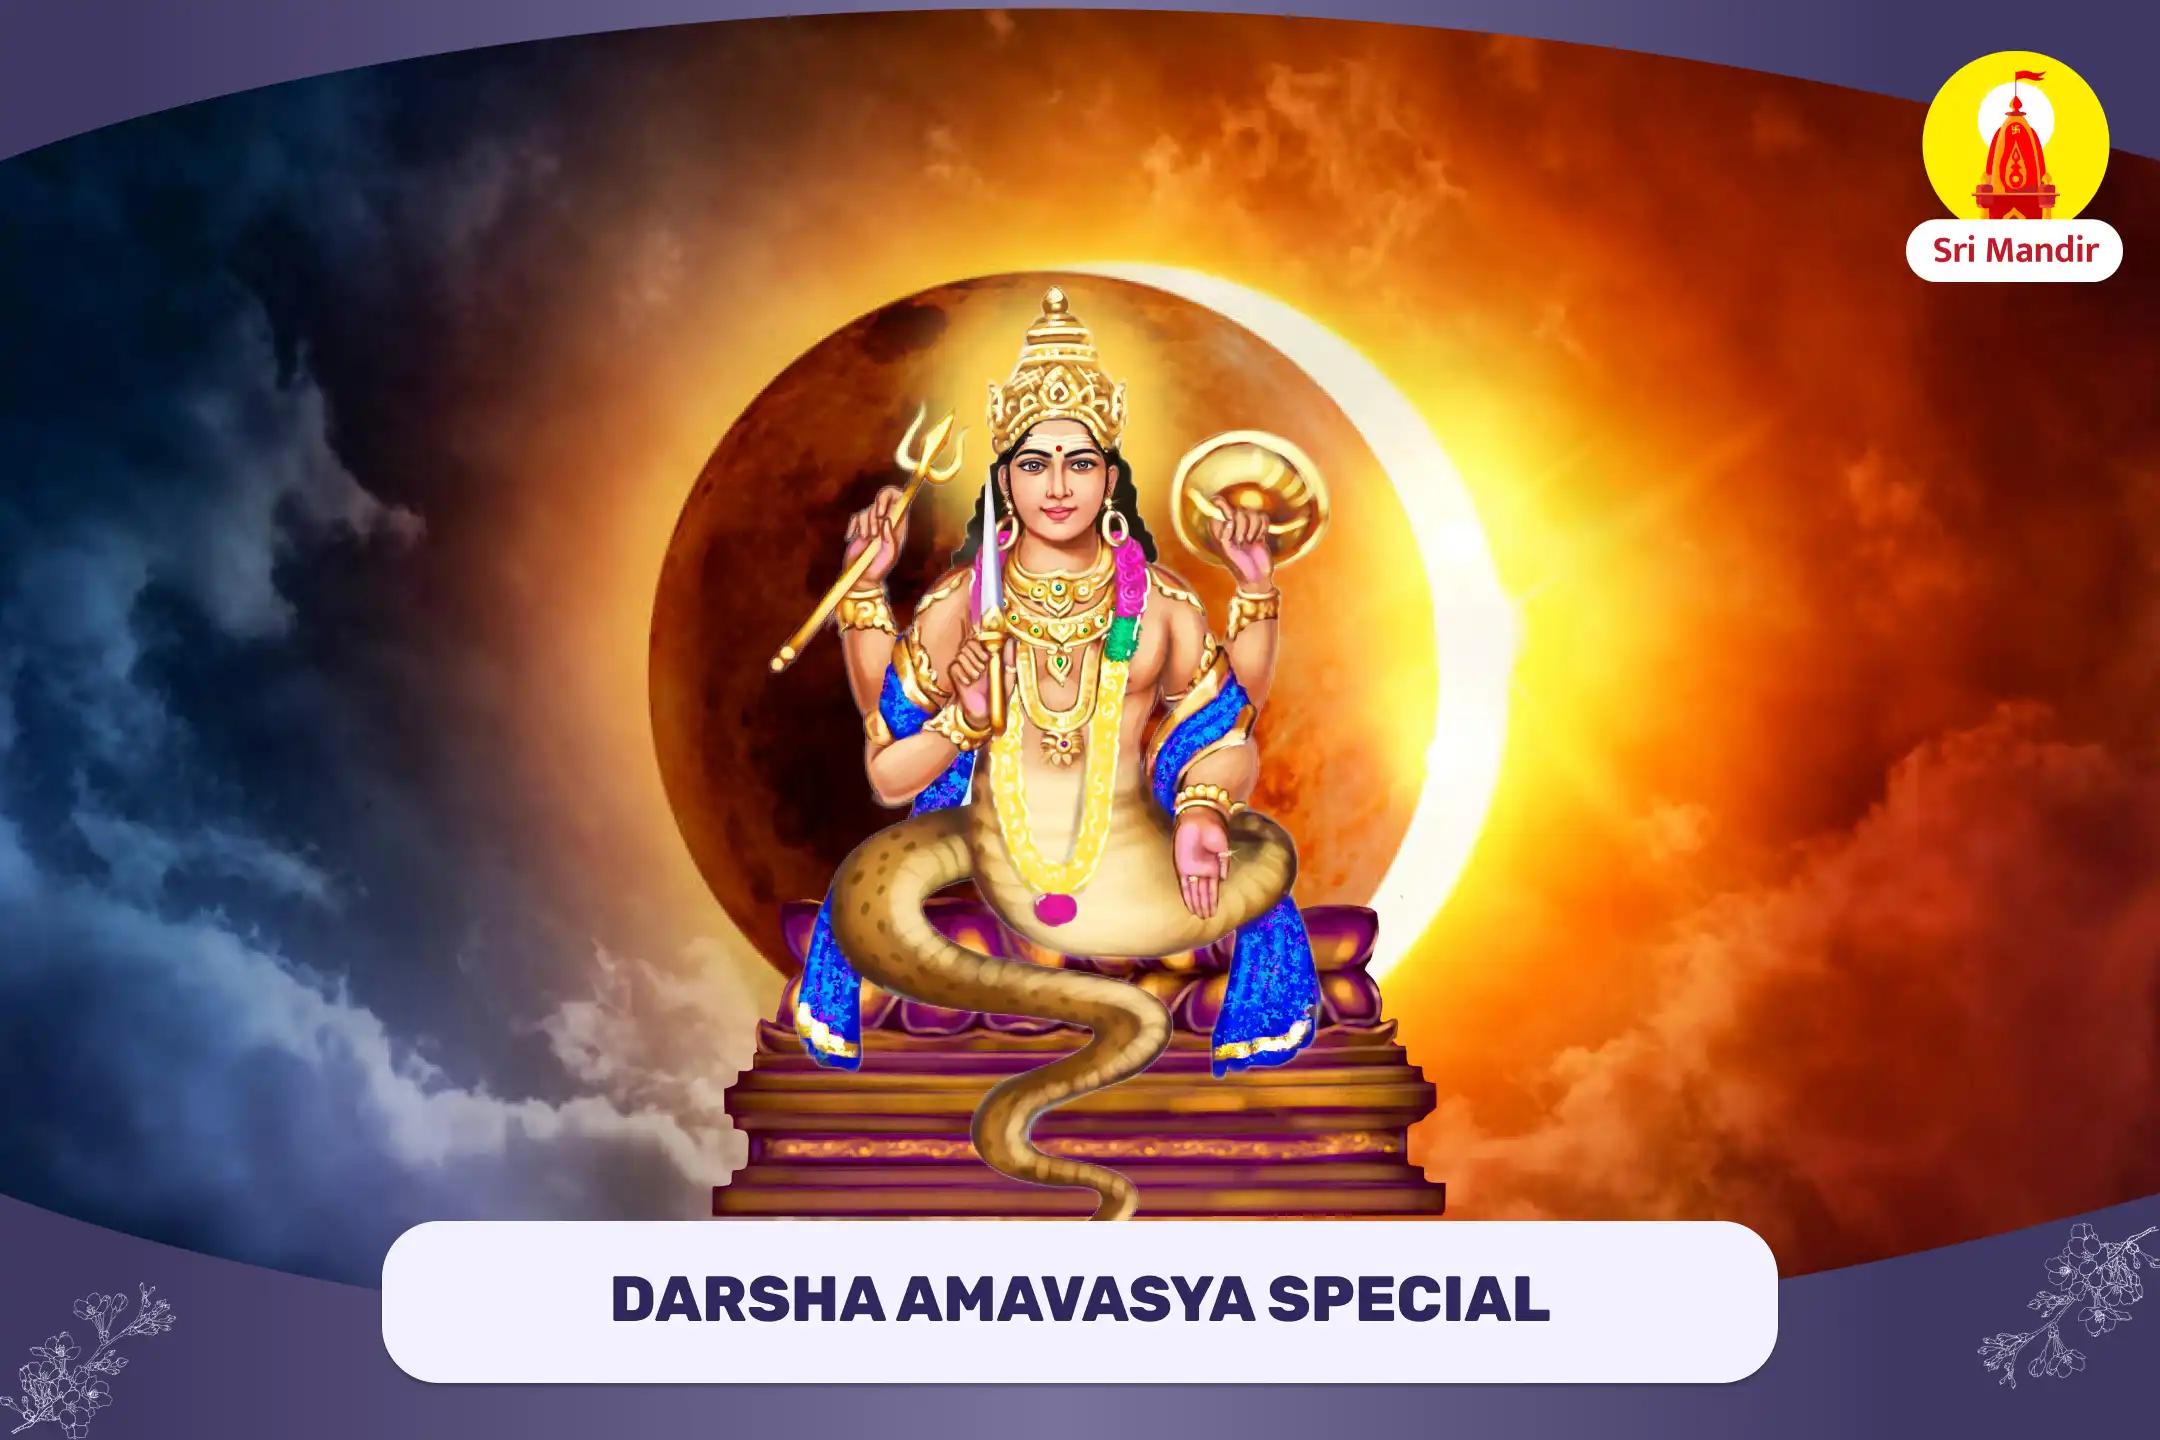 Darsha Amavasya Special Rahu Surya Grahan Dosha Mukti Puja and Rudrabhishek for Relief from Mental Anxiety and Overcoming Challenges